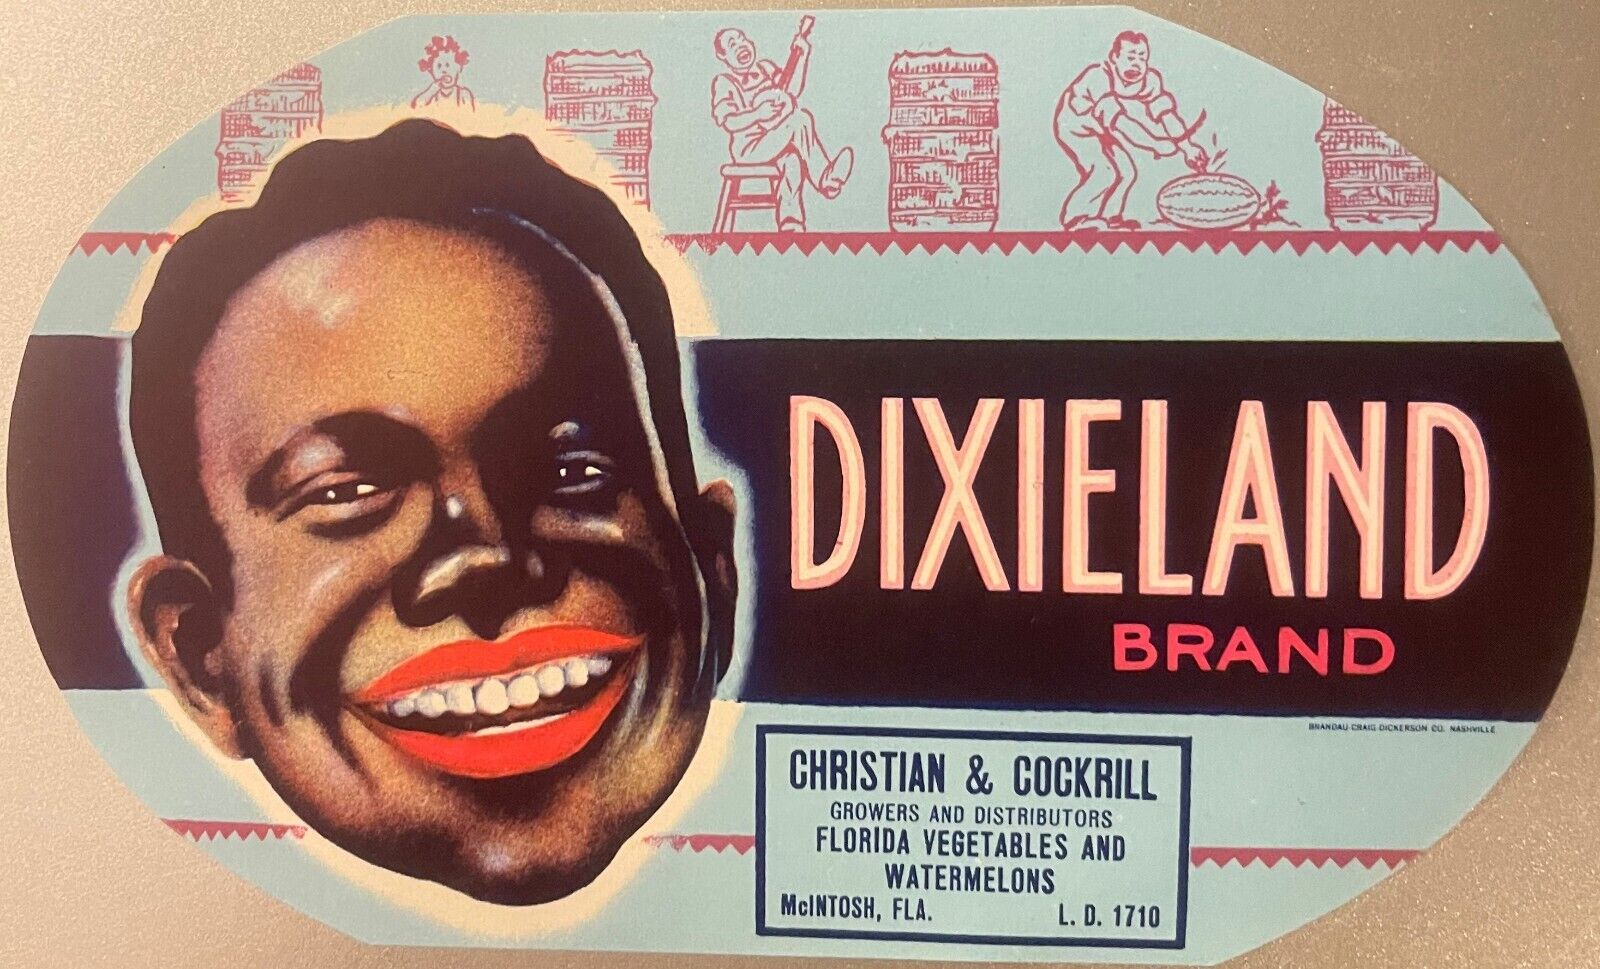 Rare Antique Vintage Dixieland Crate Label, McIntosh, FL 1930s